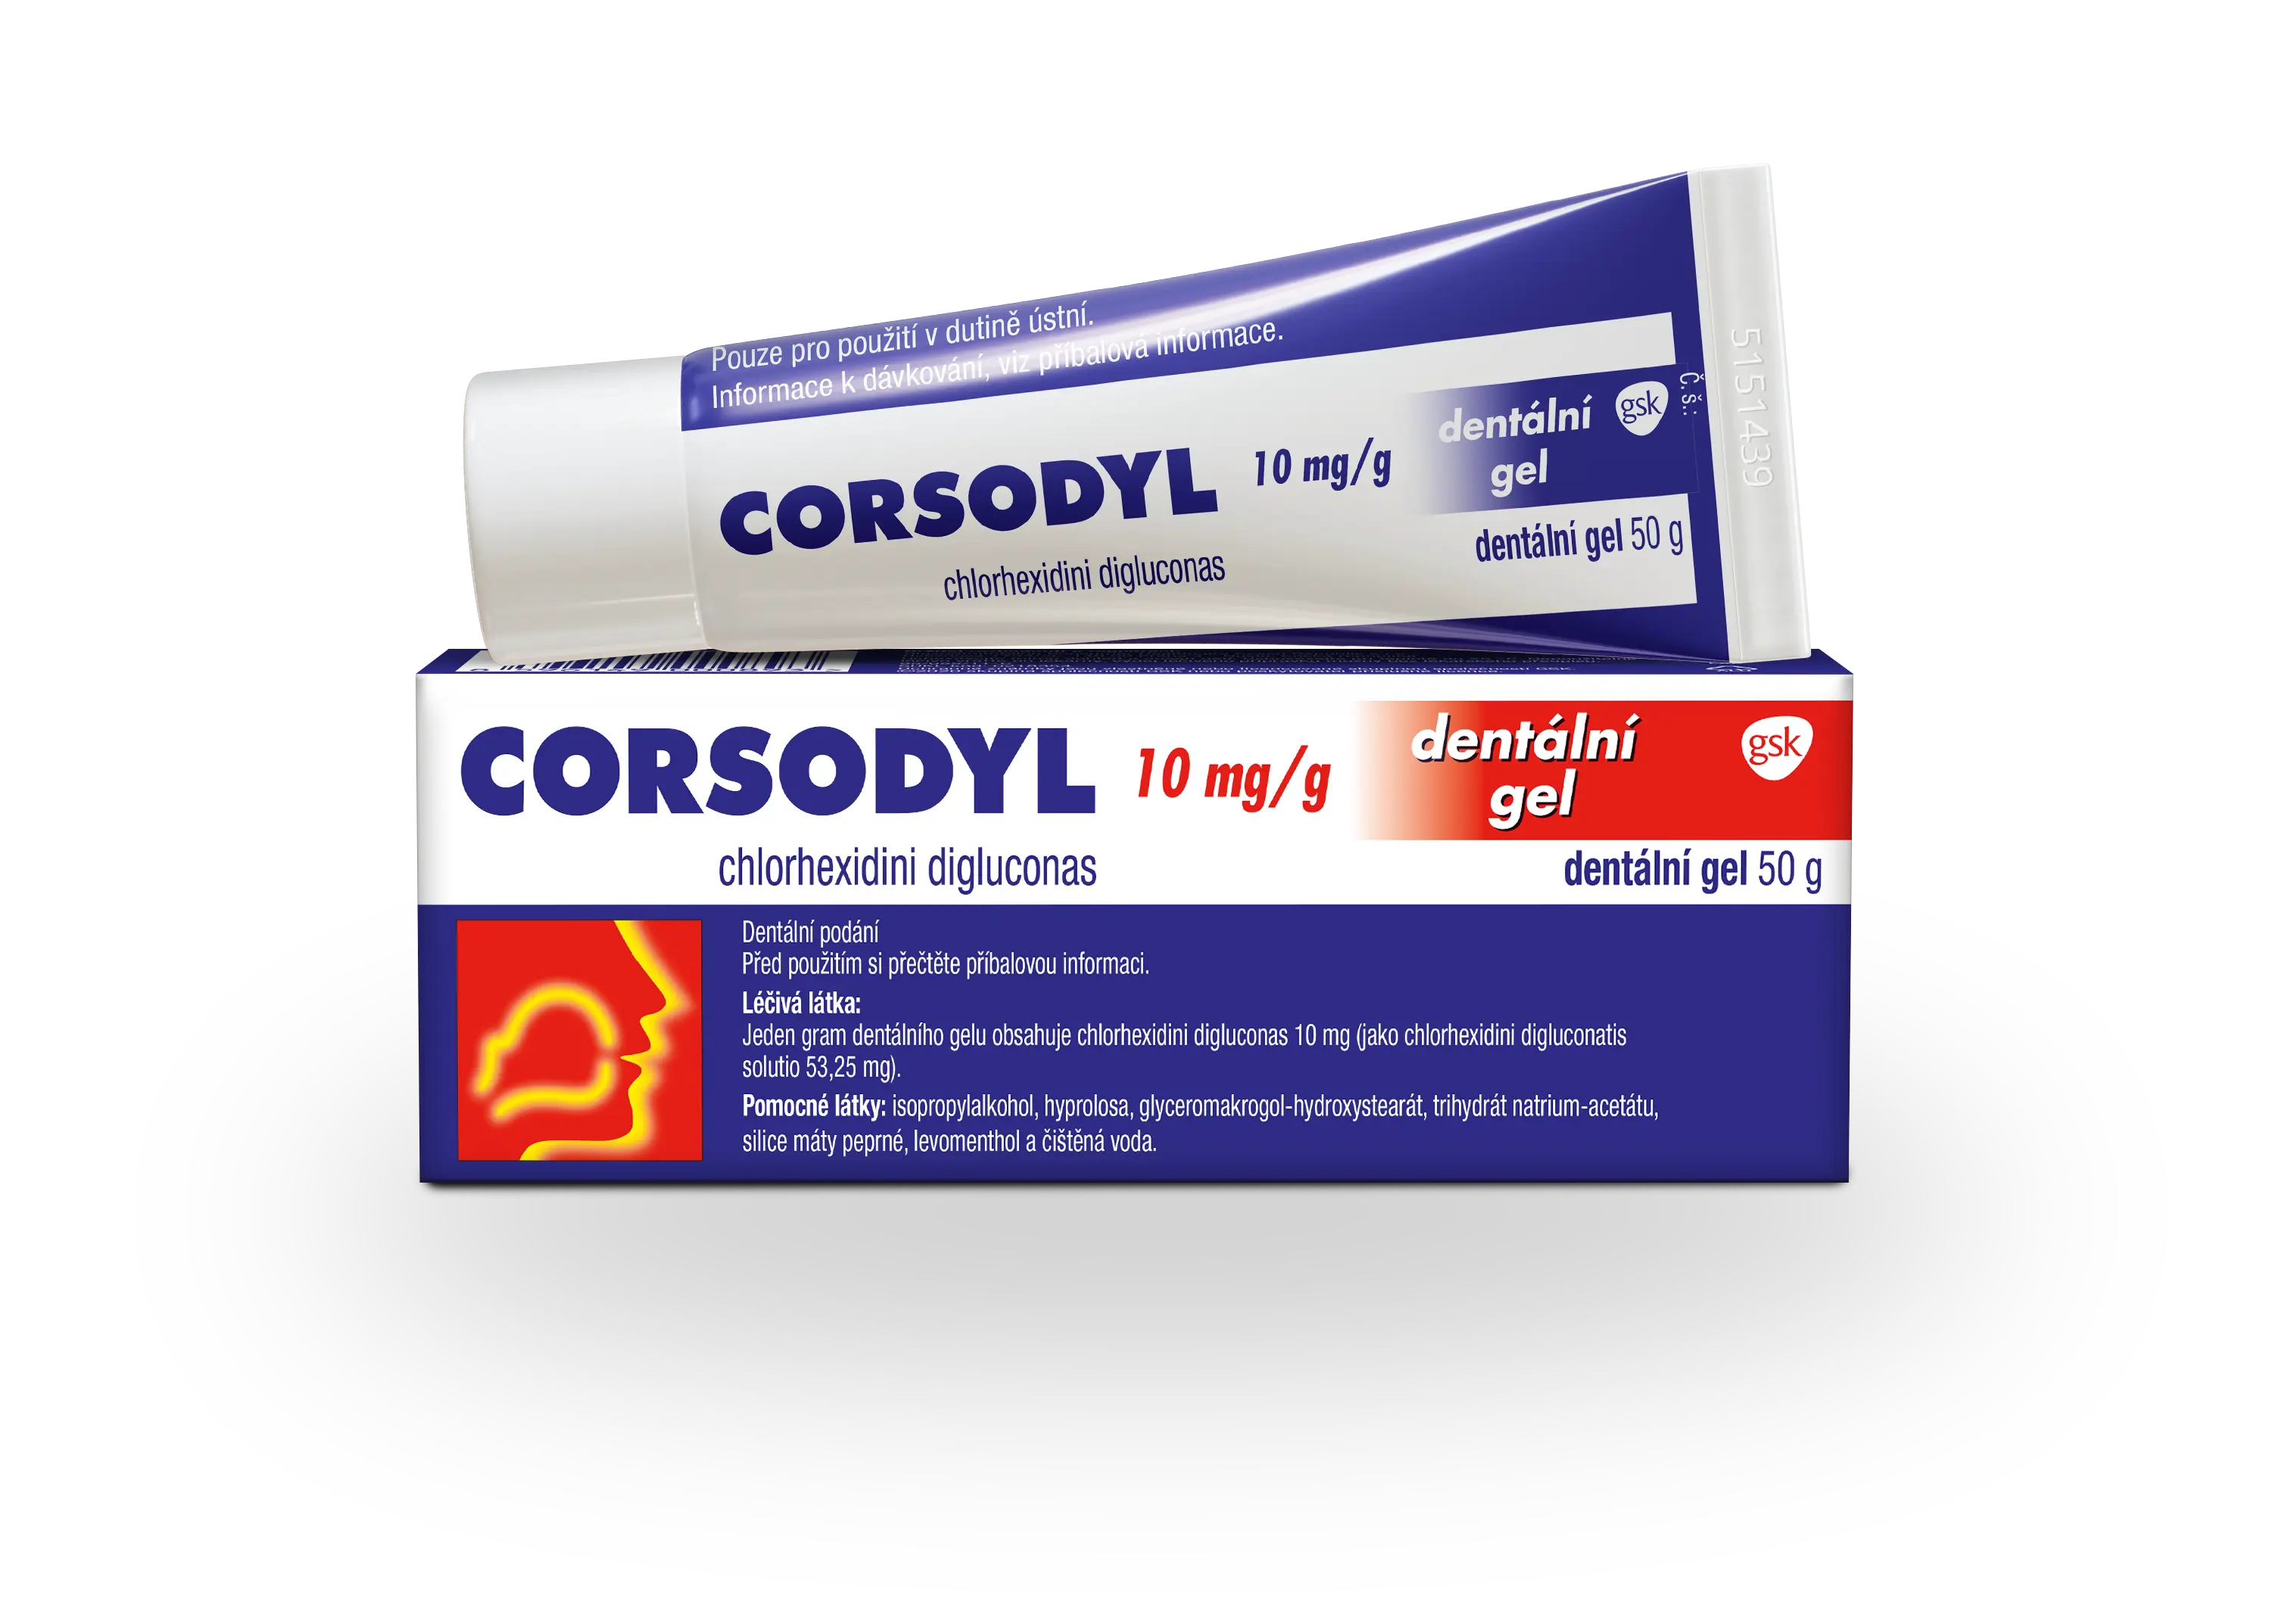 Corsodyl 1% gel stm.gel. 1 x 50 g